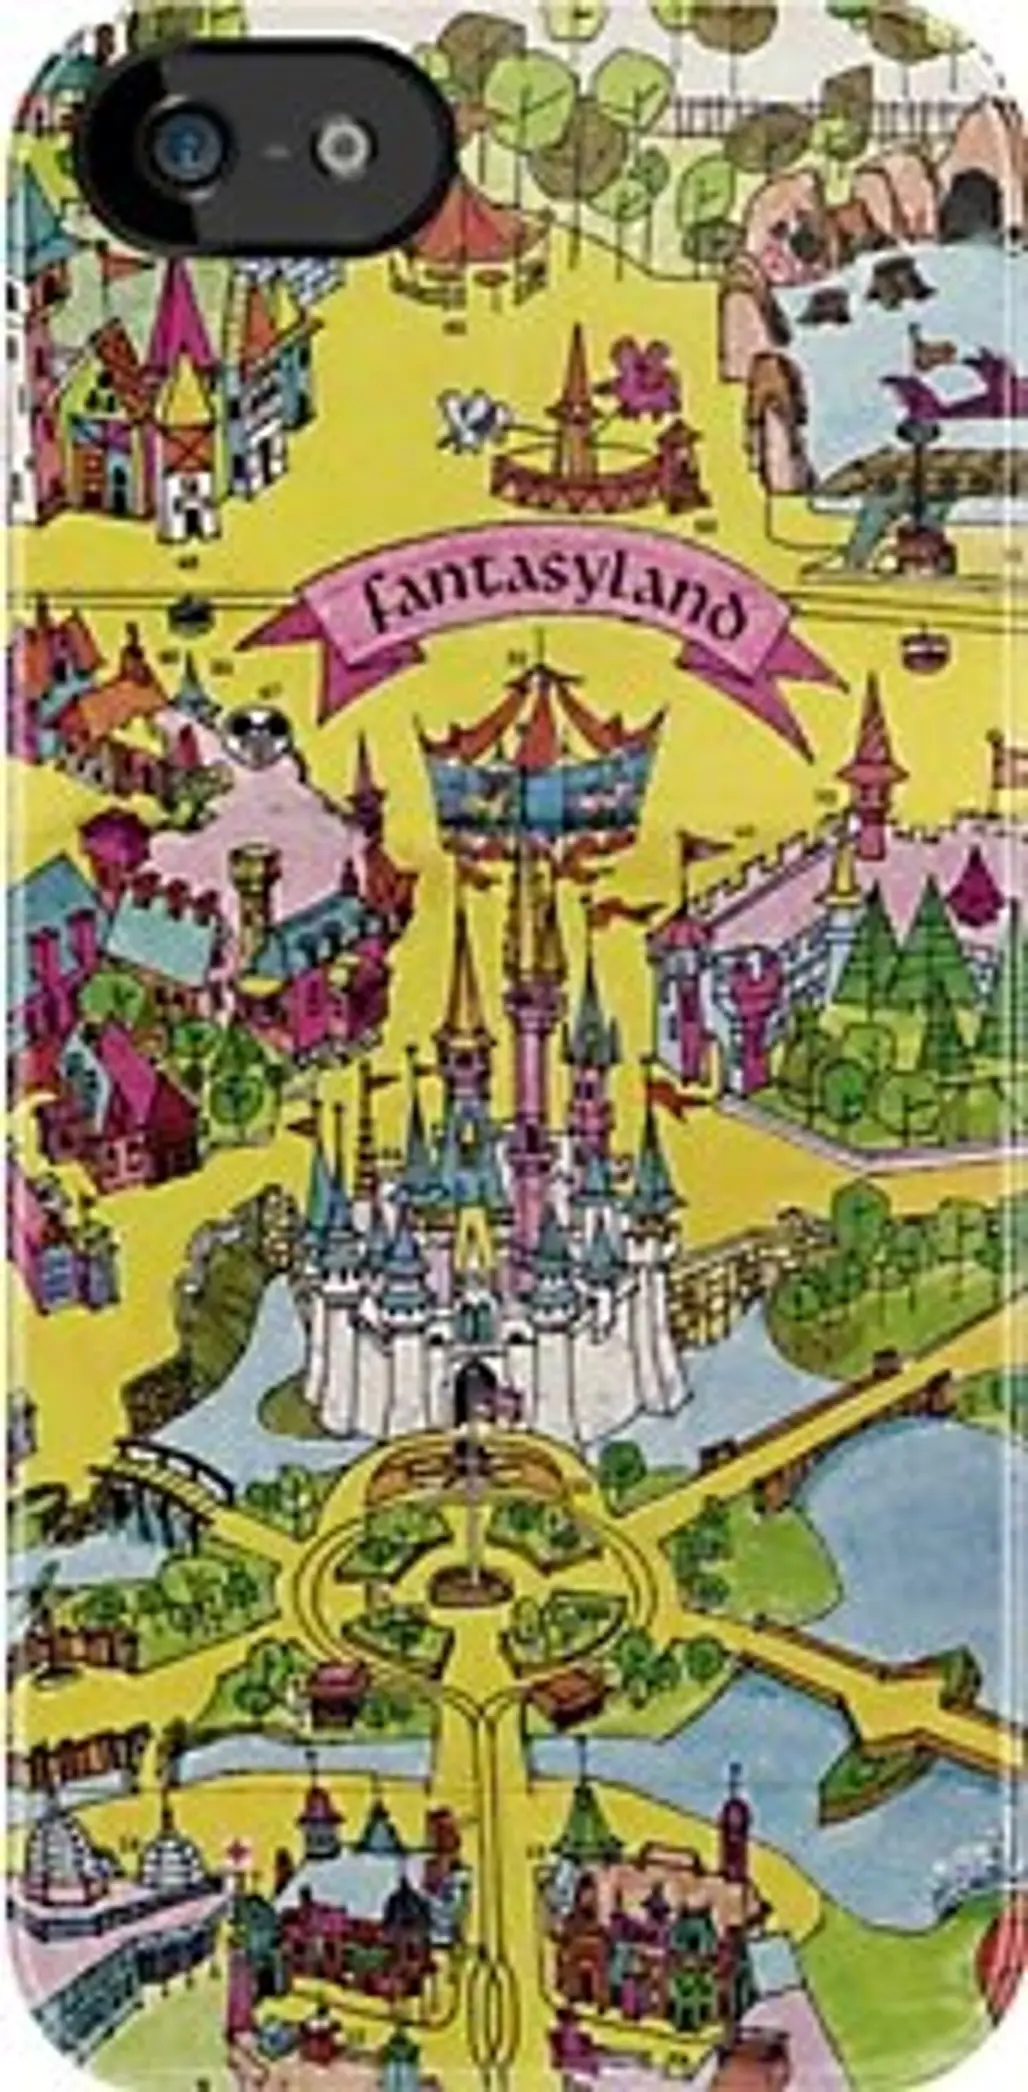 Vintage Fantasyland Map